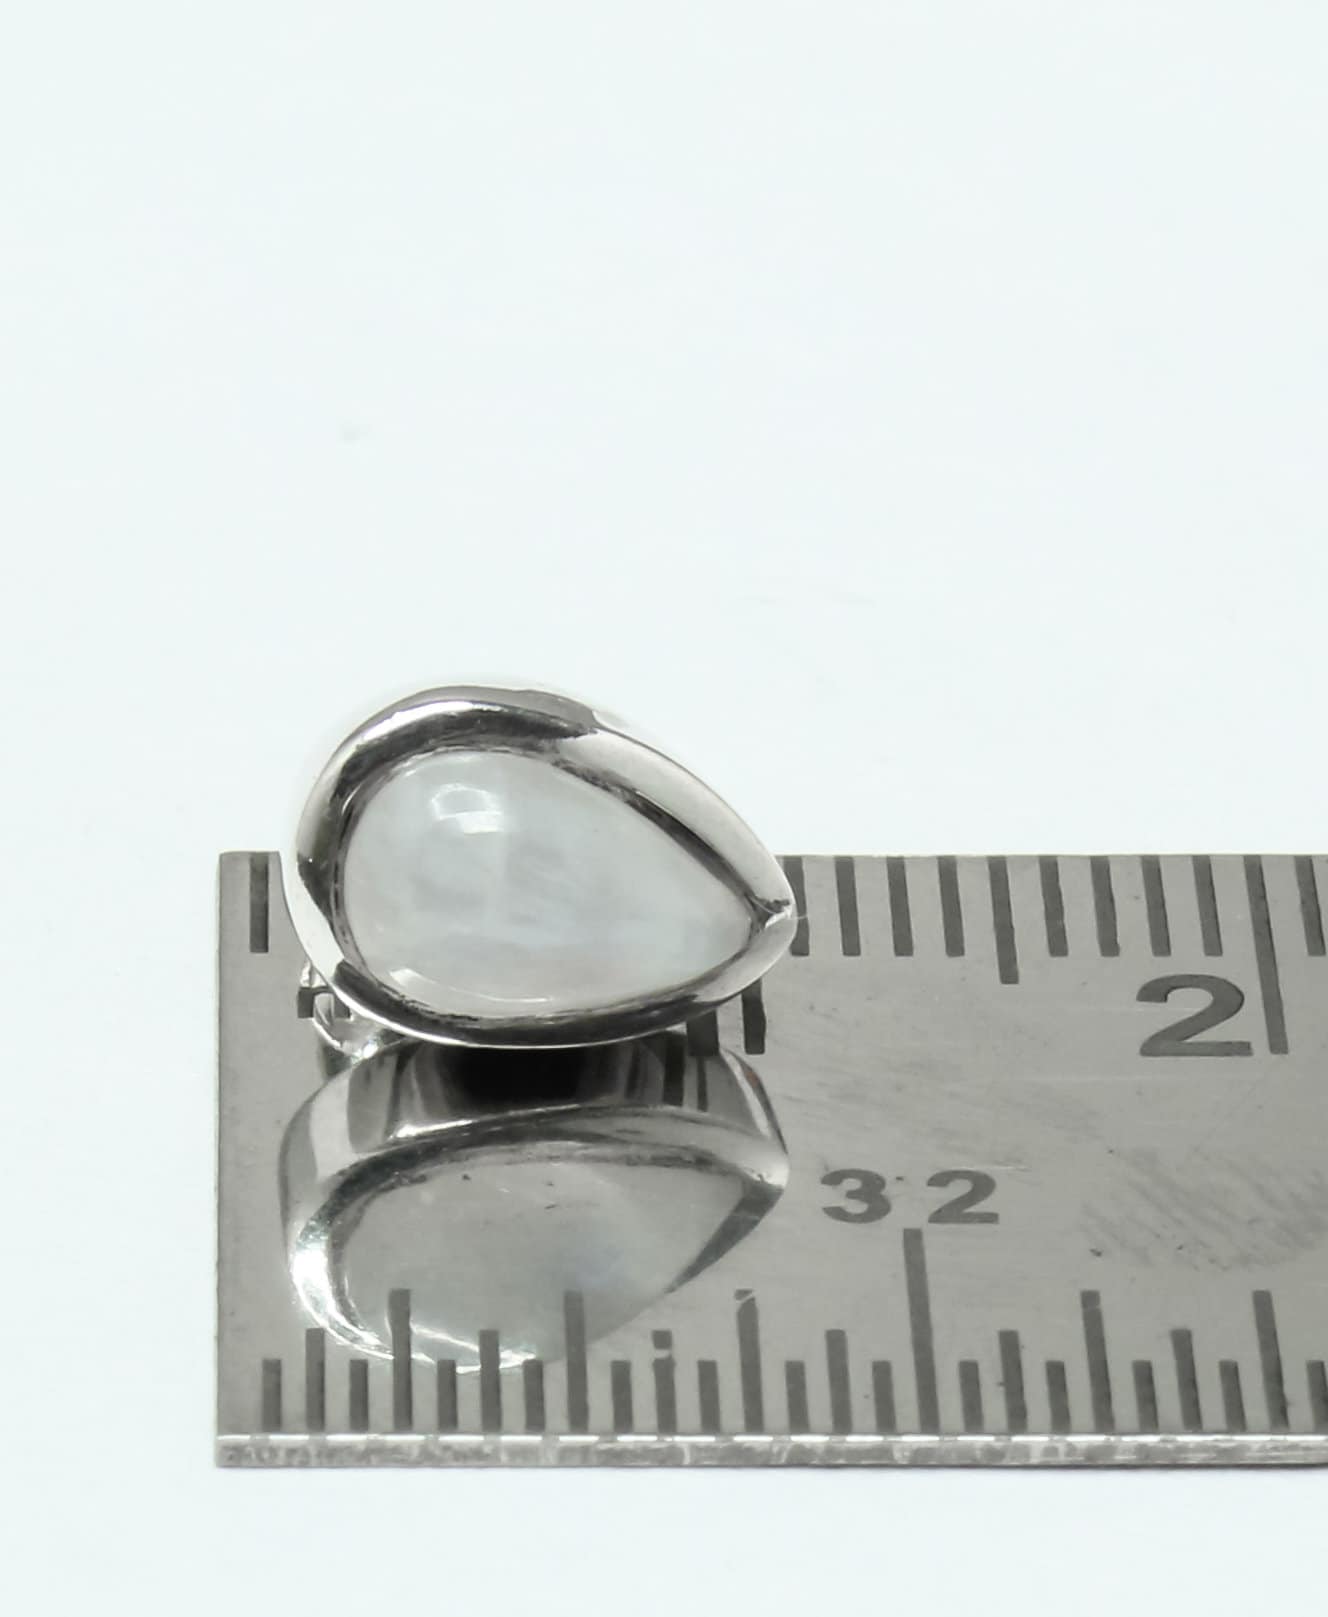 Pear/Teardrop MOONSTONE Gems Solid 925 Silver Minimalist Stud Earrings